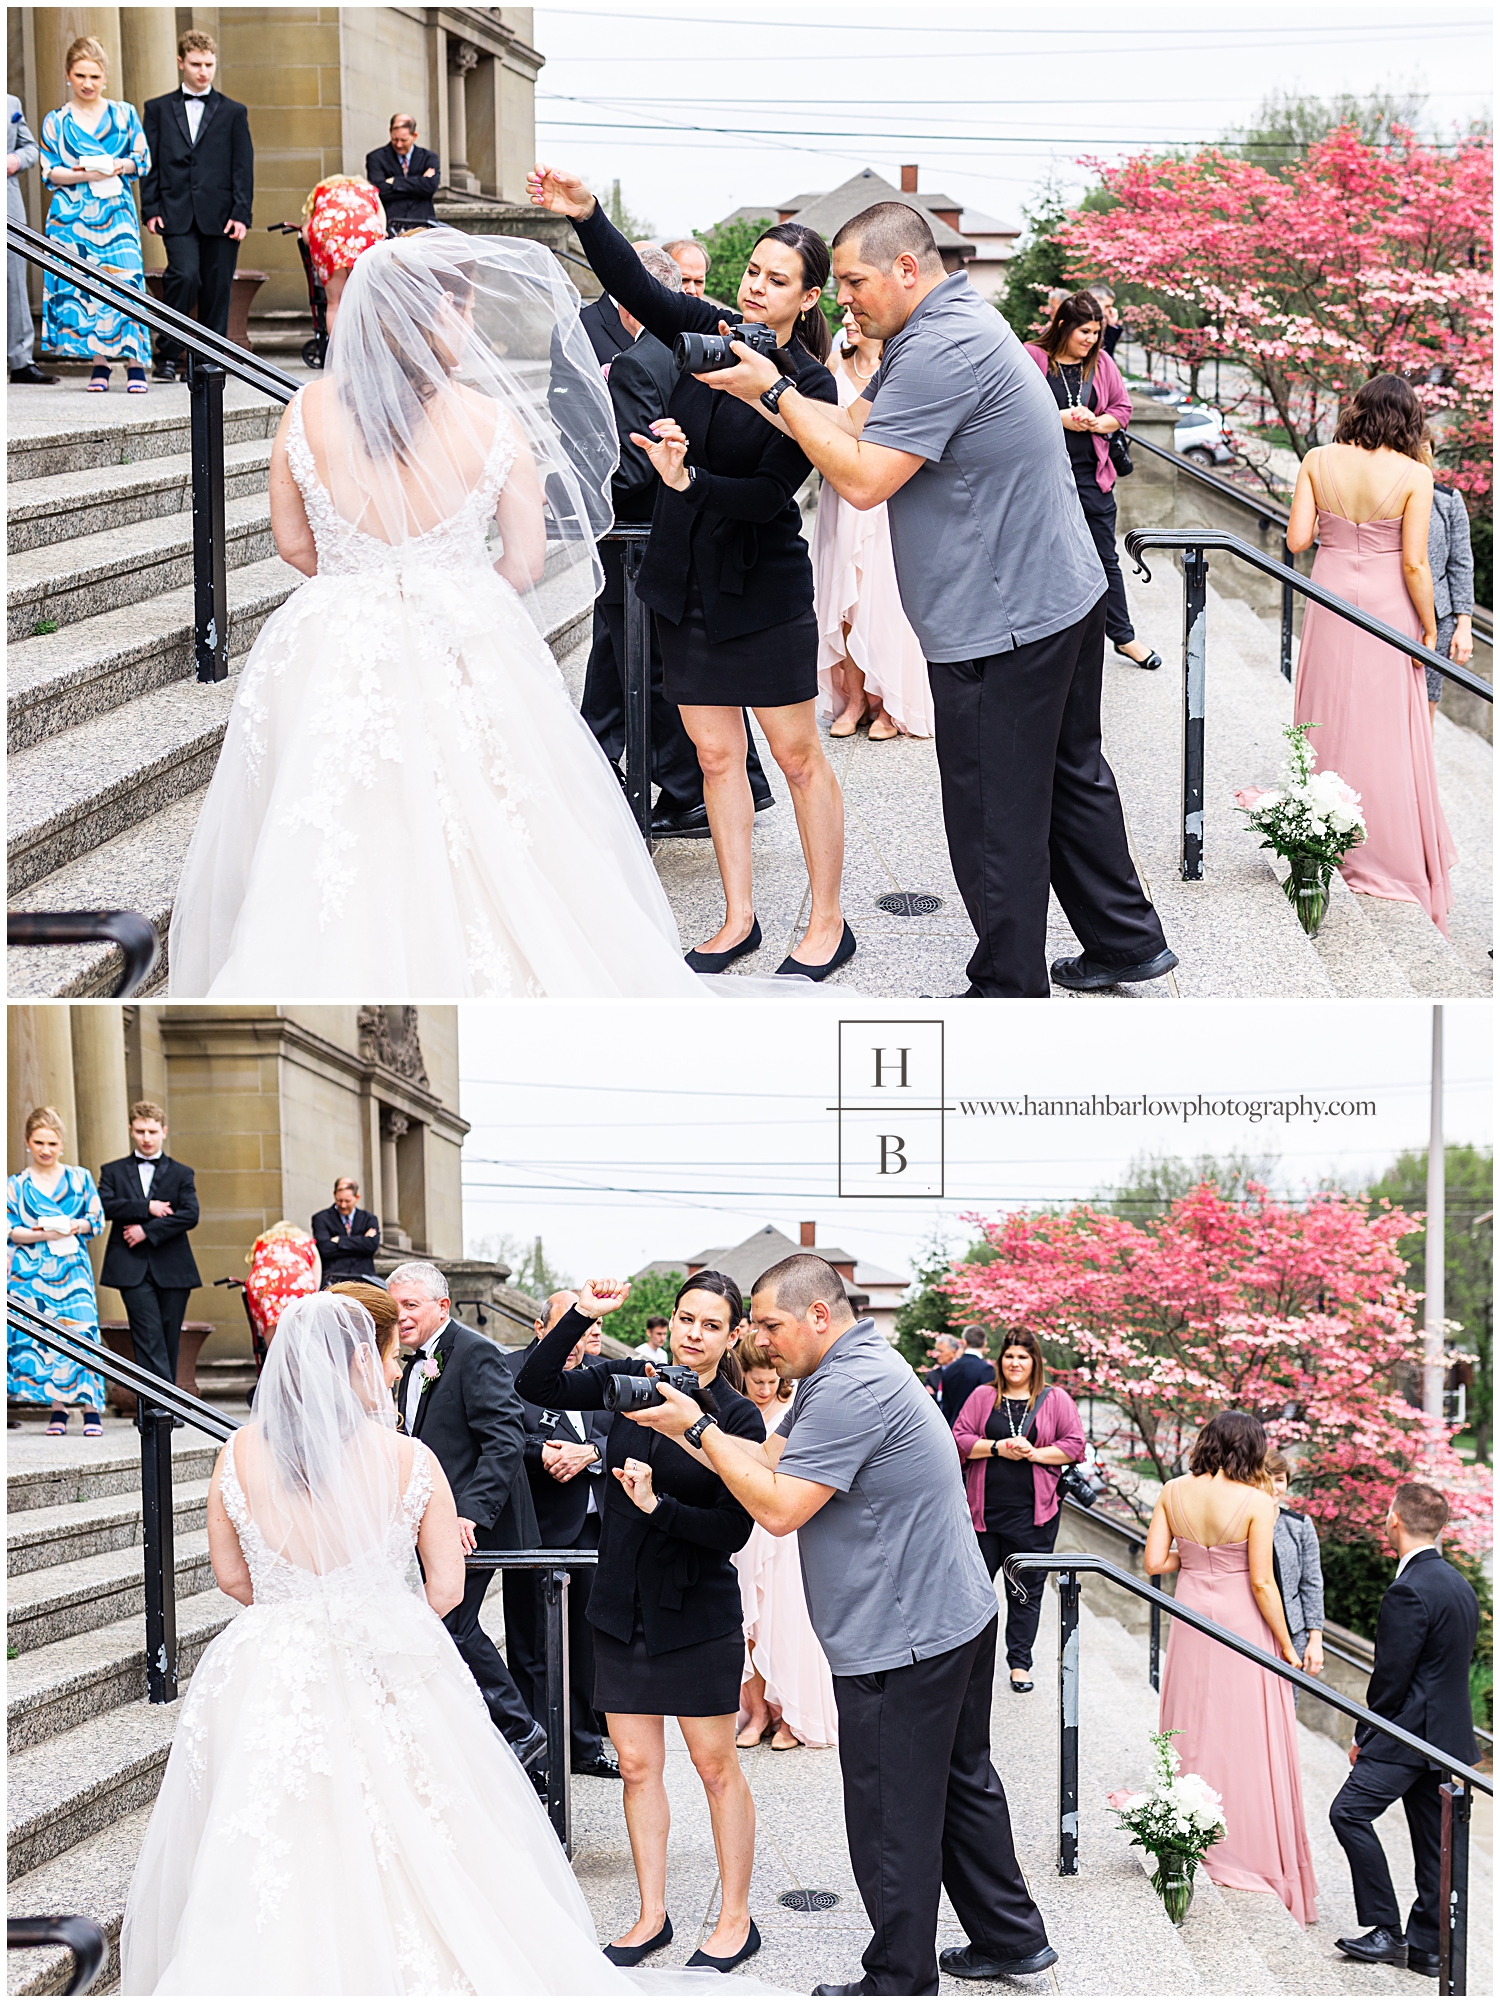 Wedding photographer and videographer work together to take wedding photos.